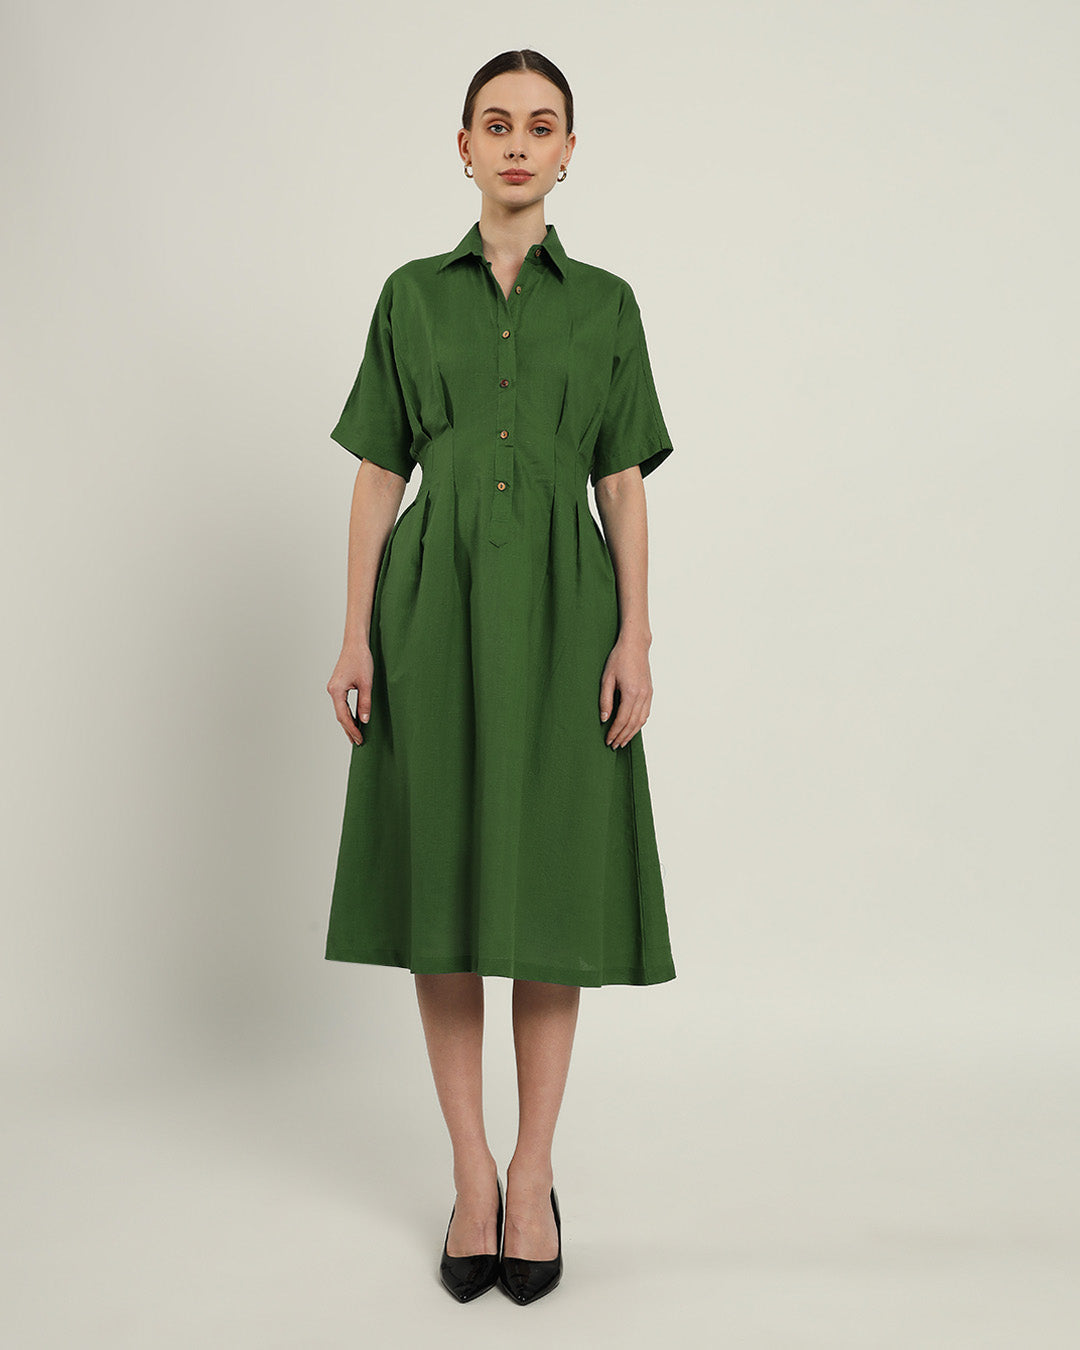 The Salford Emerald Dress